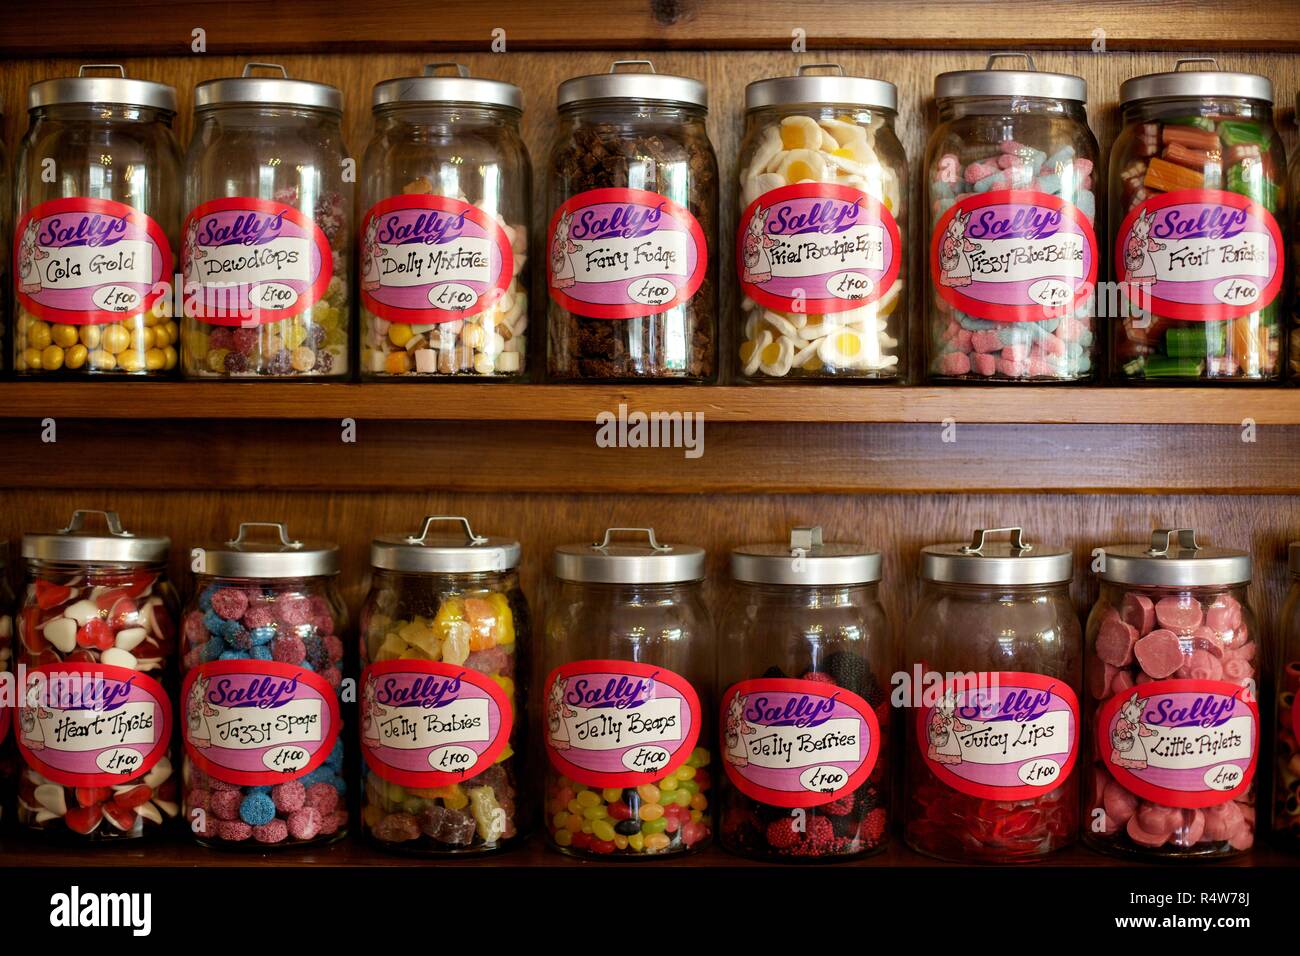 Rayons des bonbons dans un magasin de bonbons Banque D'Images